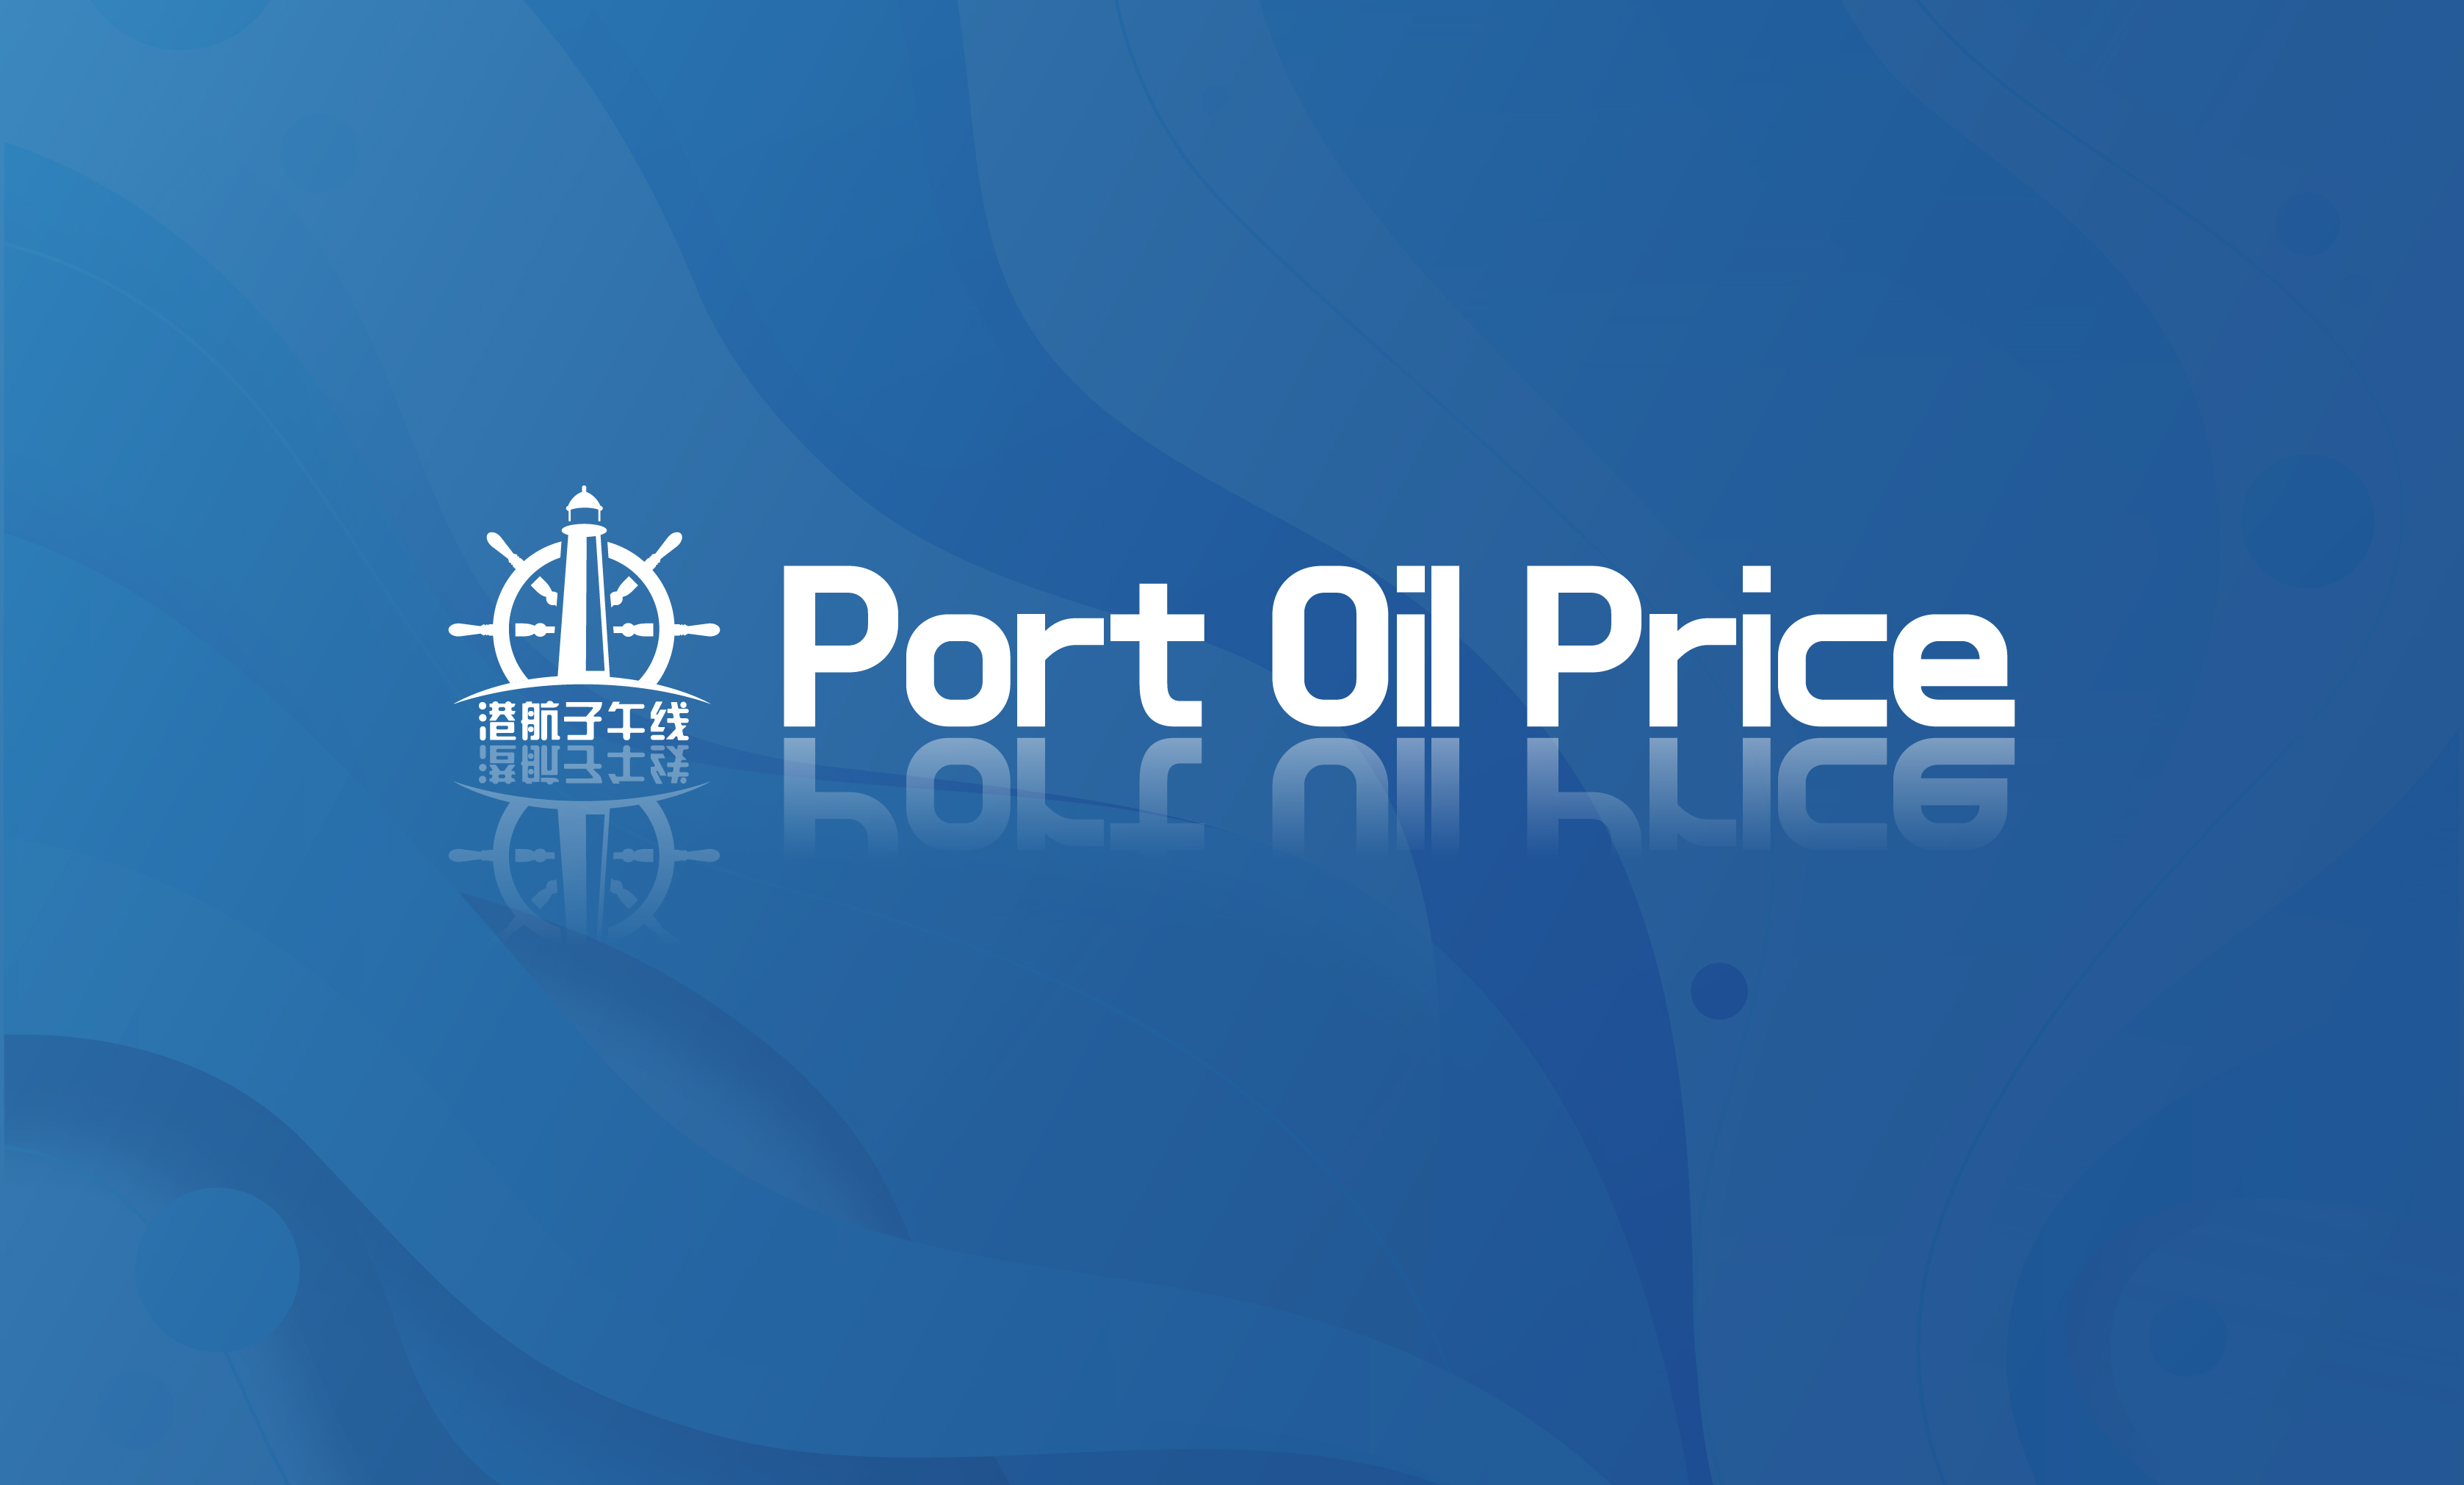 7/25 Oil Price for Global Popular Ports